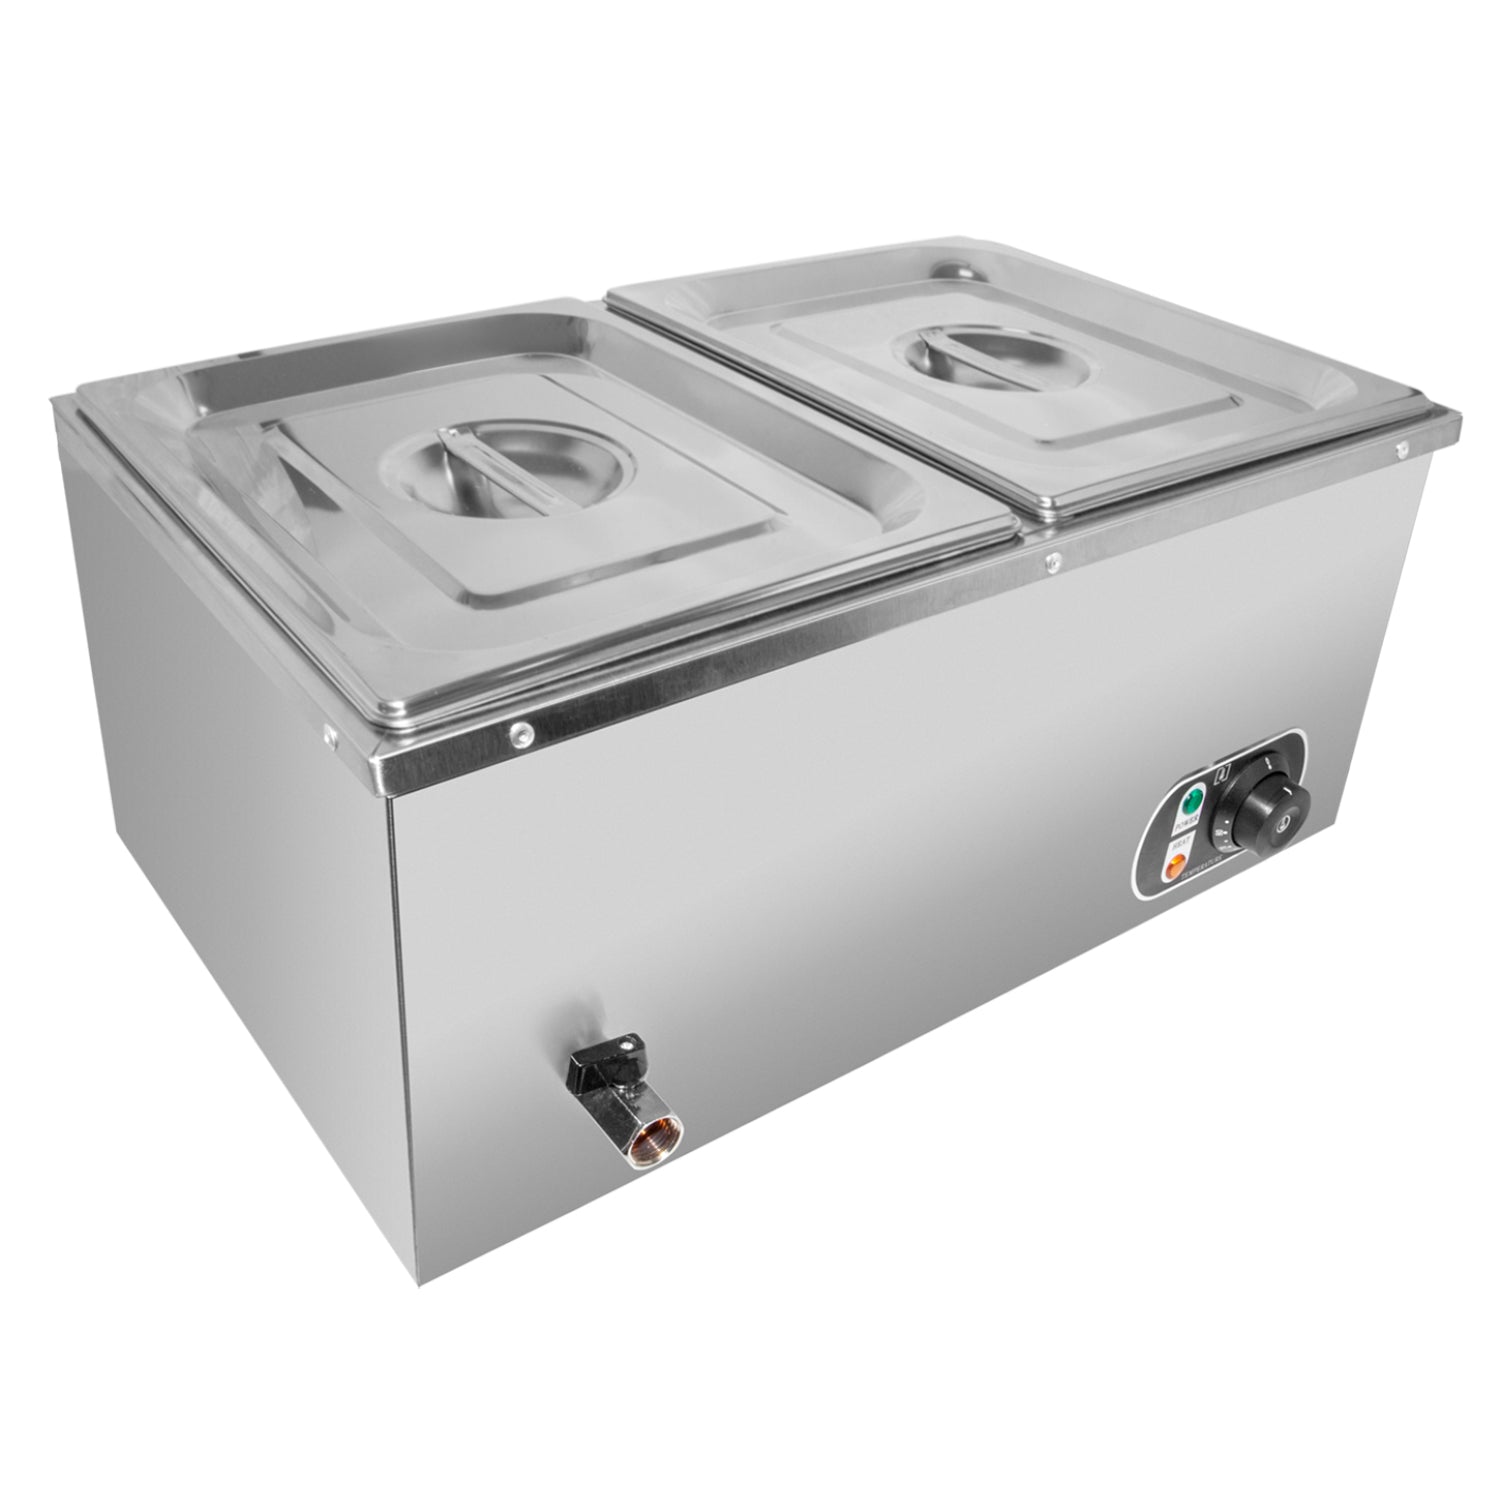 ALDKitchen Bain Marie Steam Warmer | Electric Buffet Food Warmer | Stainless Steel | 2 tanks | 110V